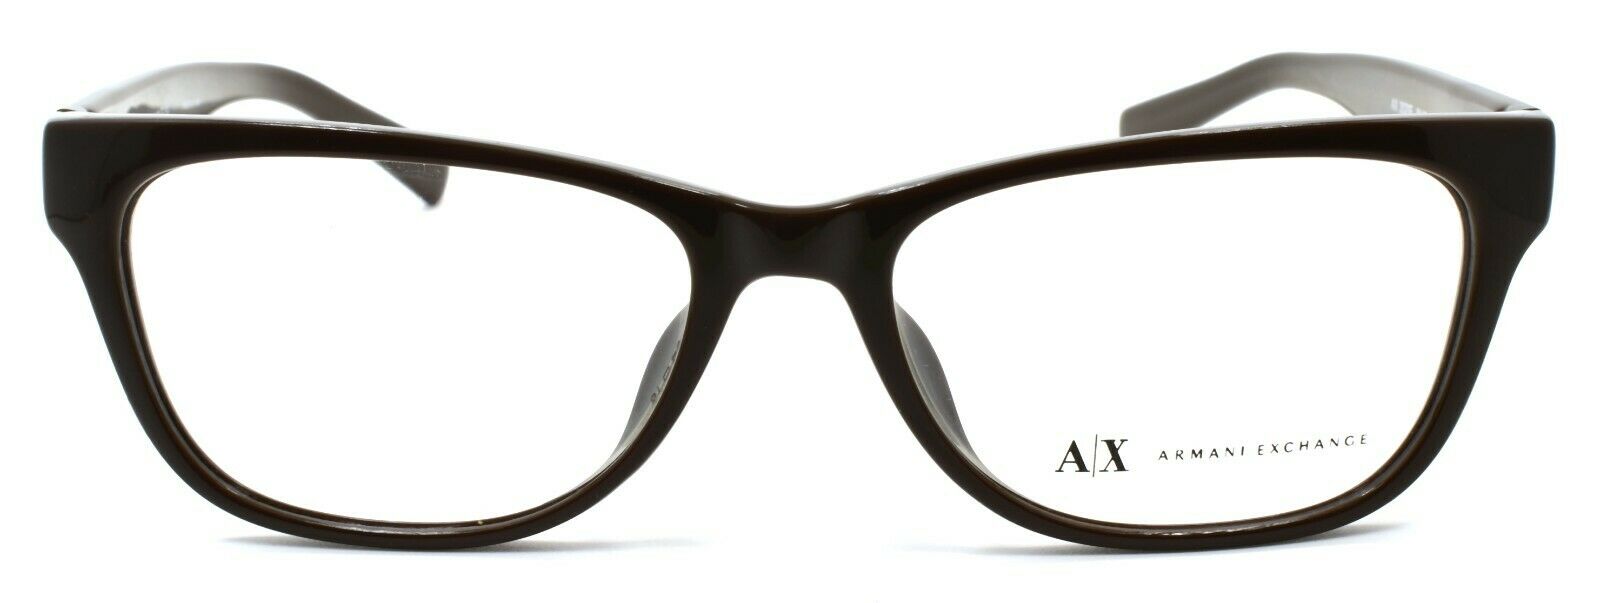 2-Armani Exchange AX3020F 8149 Women's Eyeglasses Frames 54-16-135 Brown / Cream-8053672487213-IKSpecs